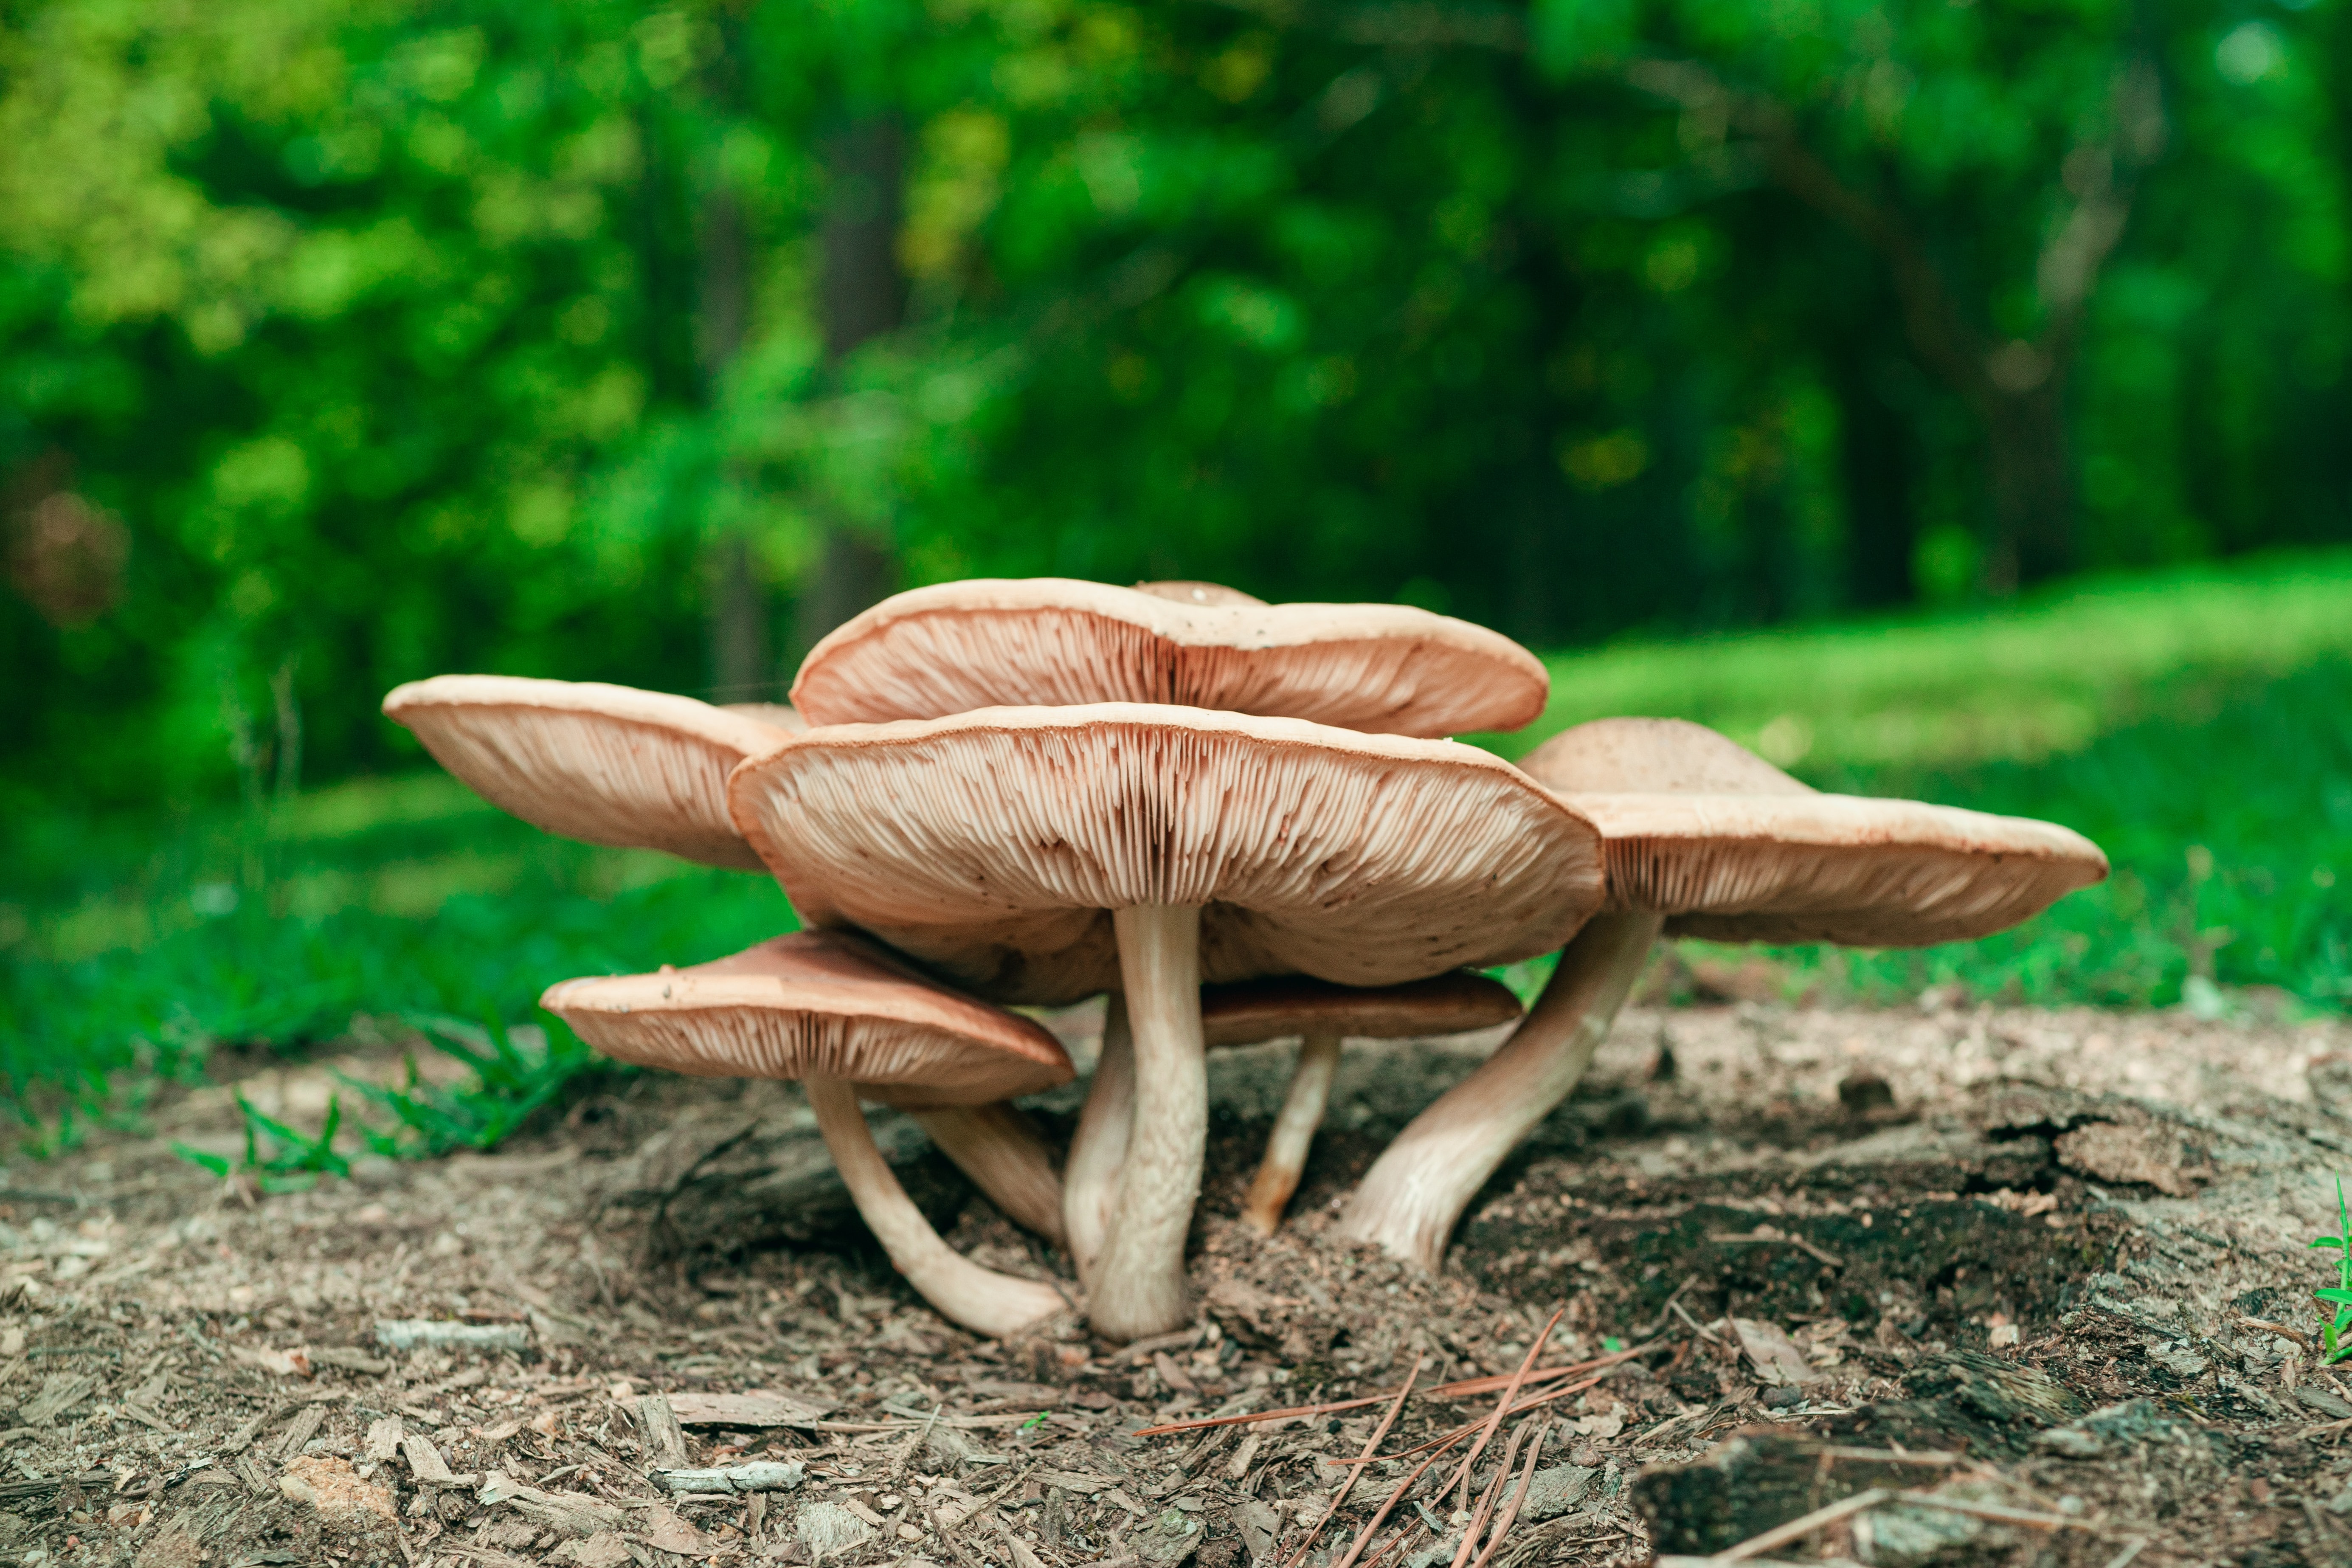 Comment identifier un champignon hallucinogène ?